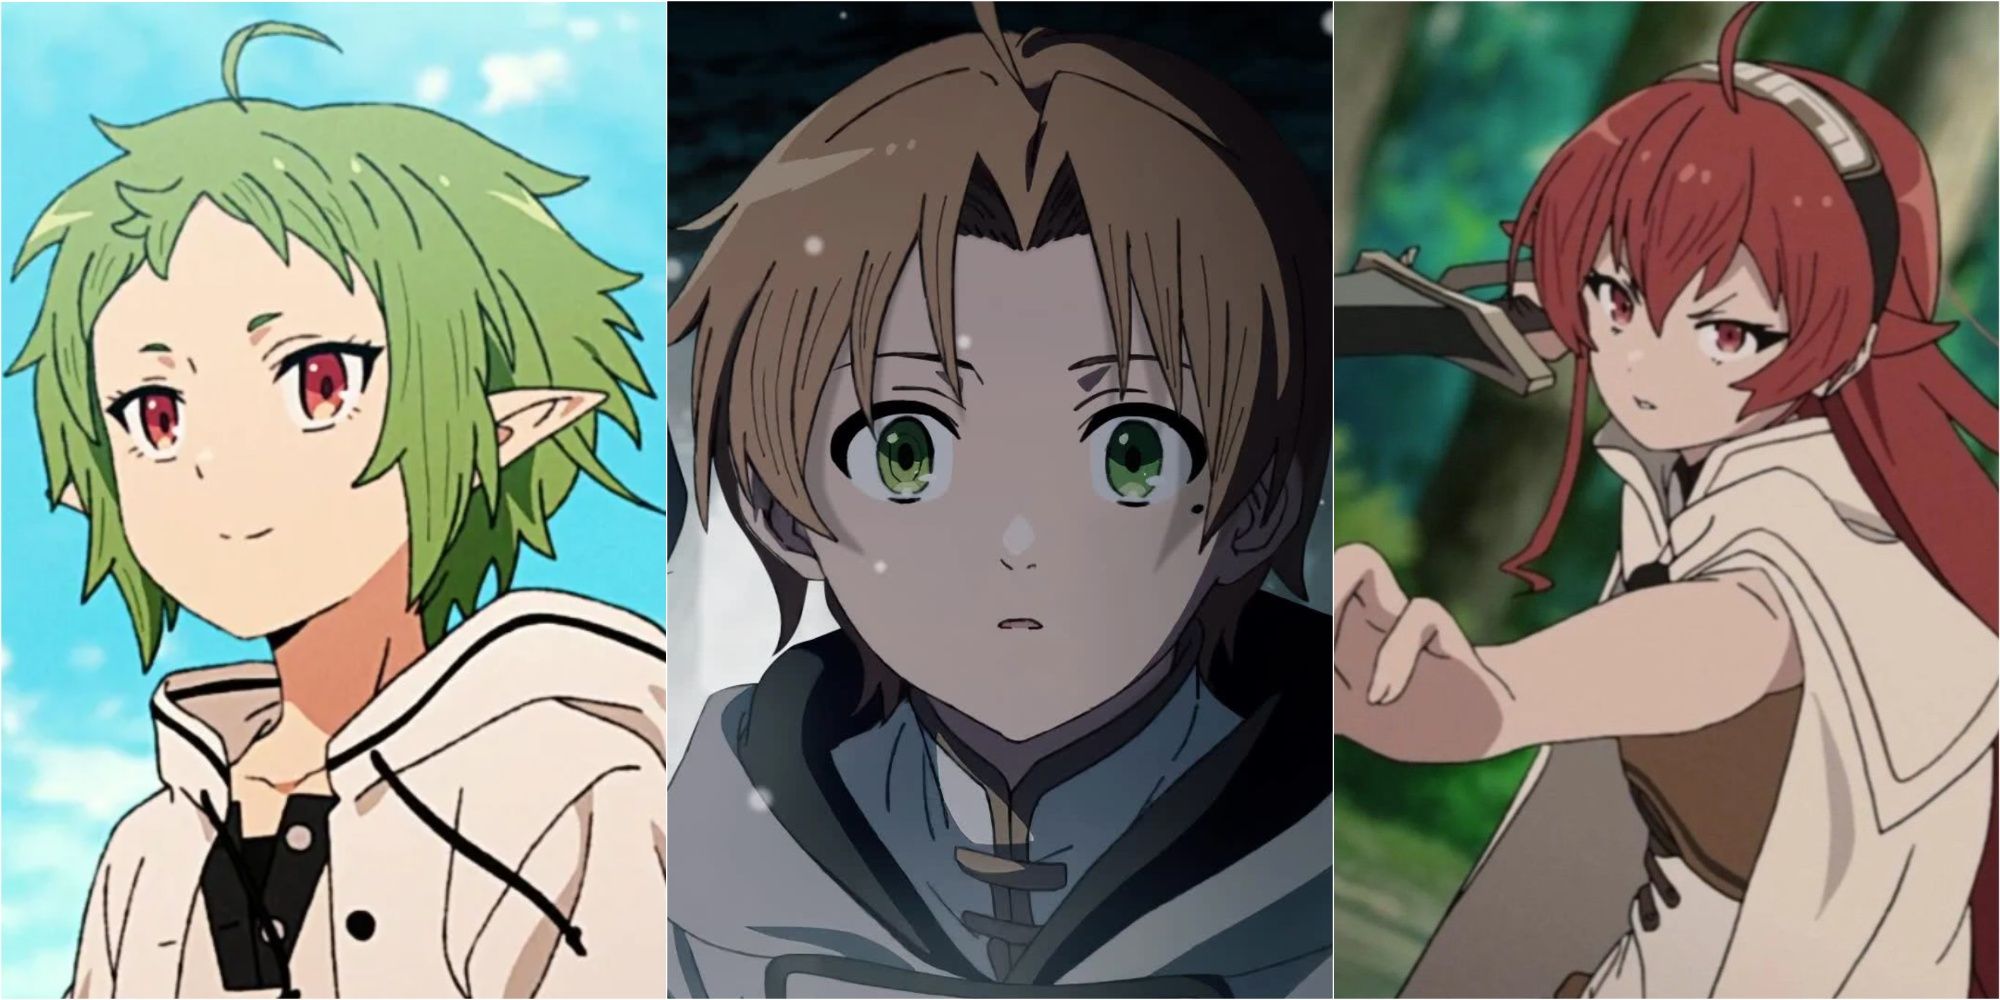 Mushoku Tensei: Every Main Character's Age, Height, & Birthday featured image